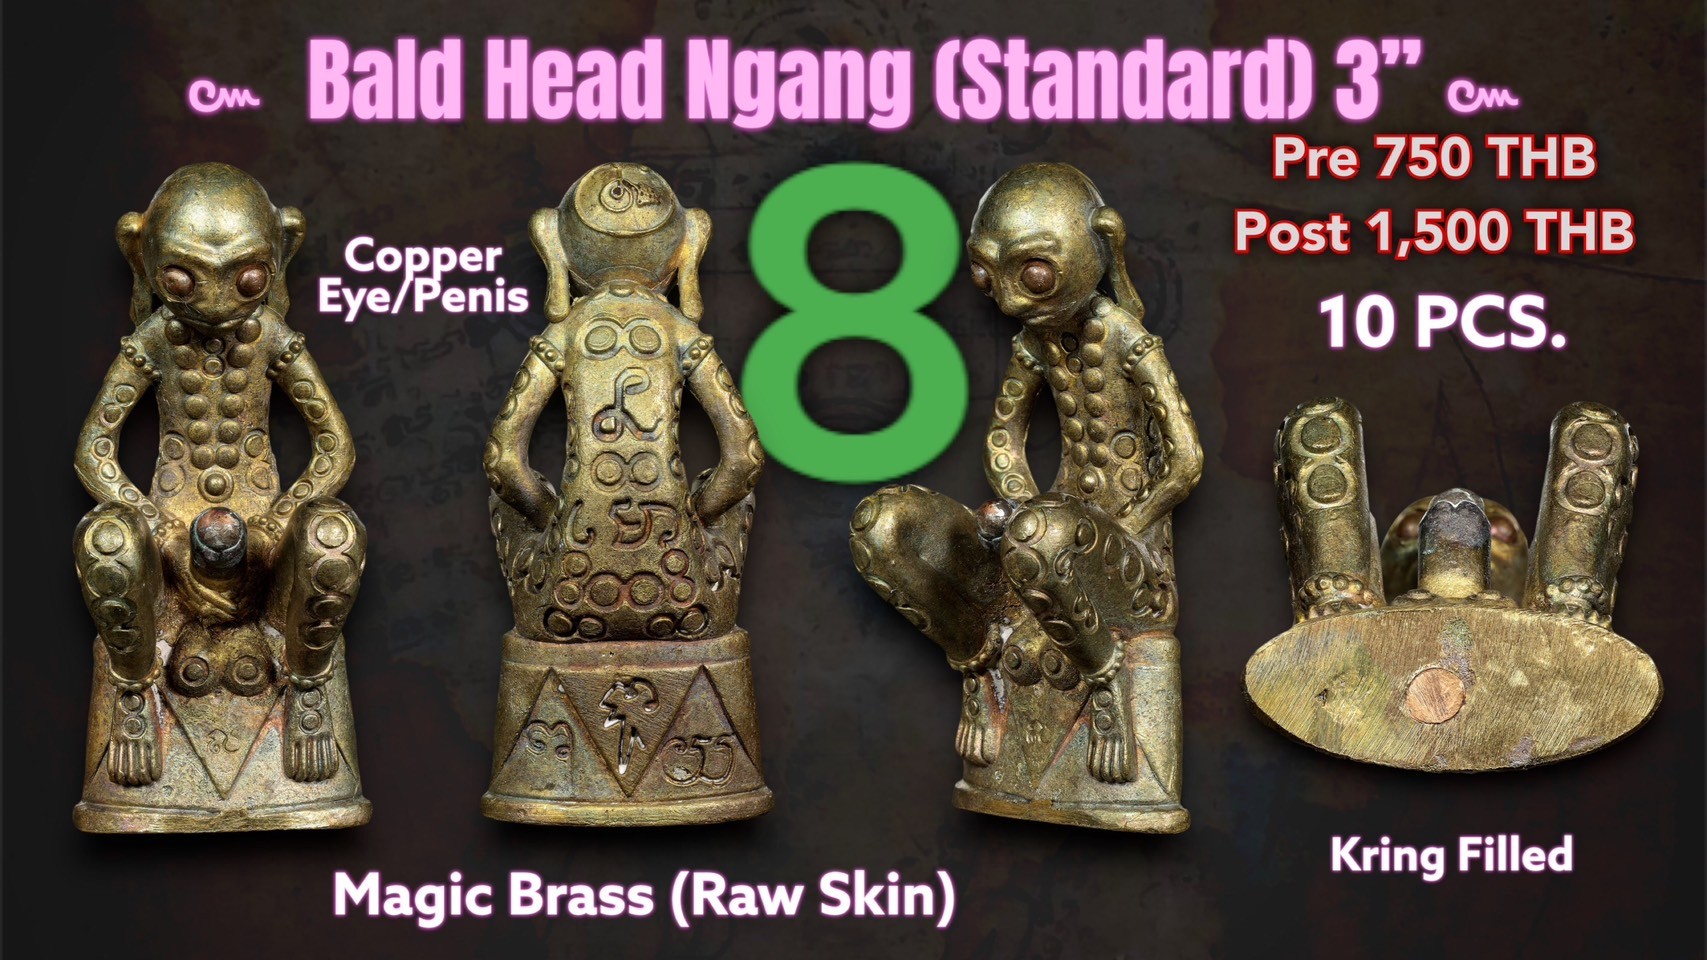 8.Bald Head Ngang Magic Brass (Raw Skin) 3 inches